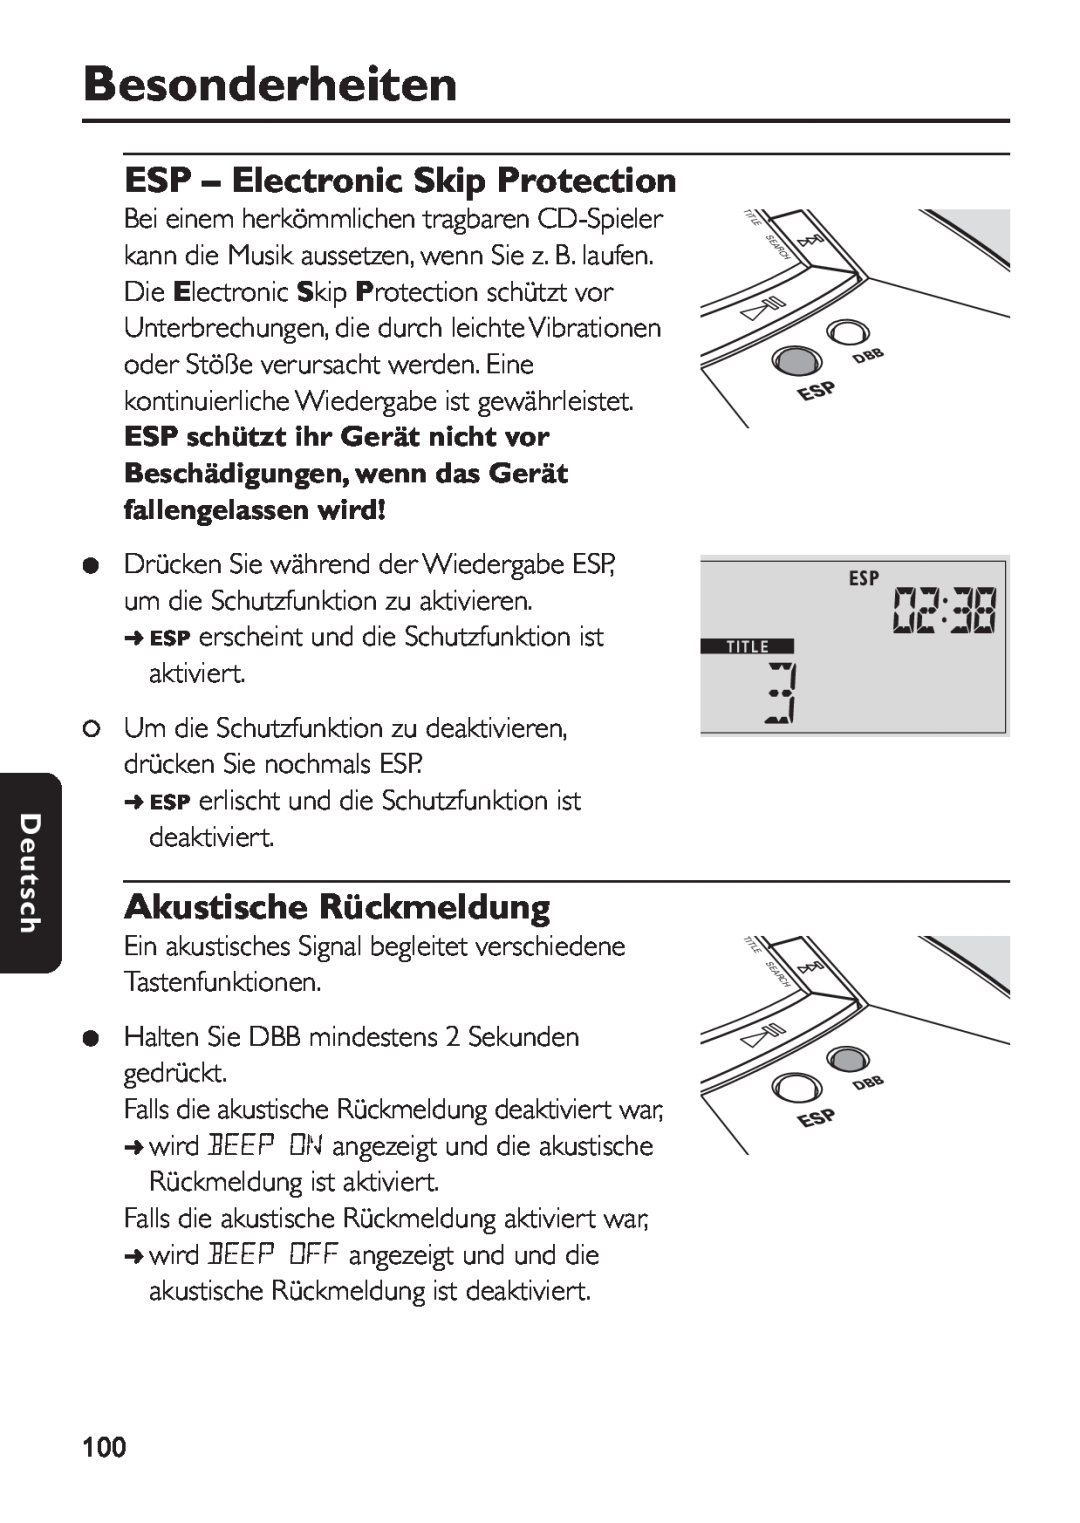 Philips EXP 501/00 manual Akustische Rückmeldung, Besonderheiten, ESP - Electronic Skip Protection, Deutsch 